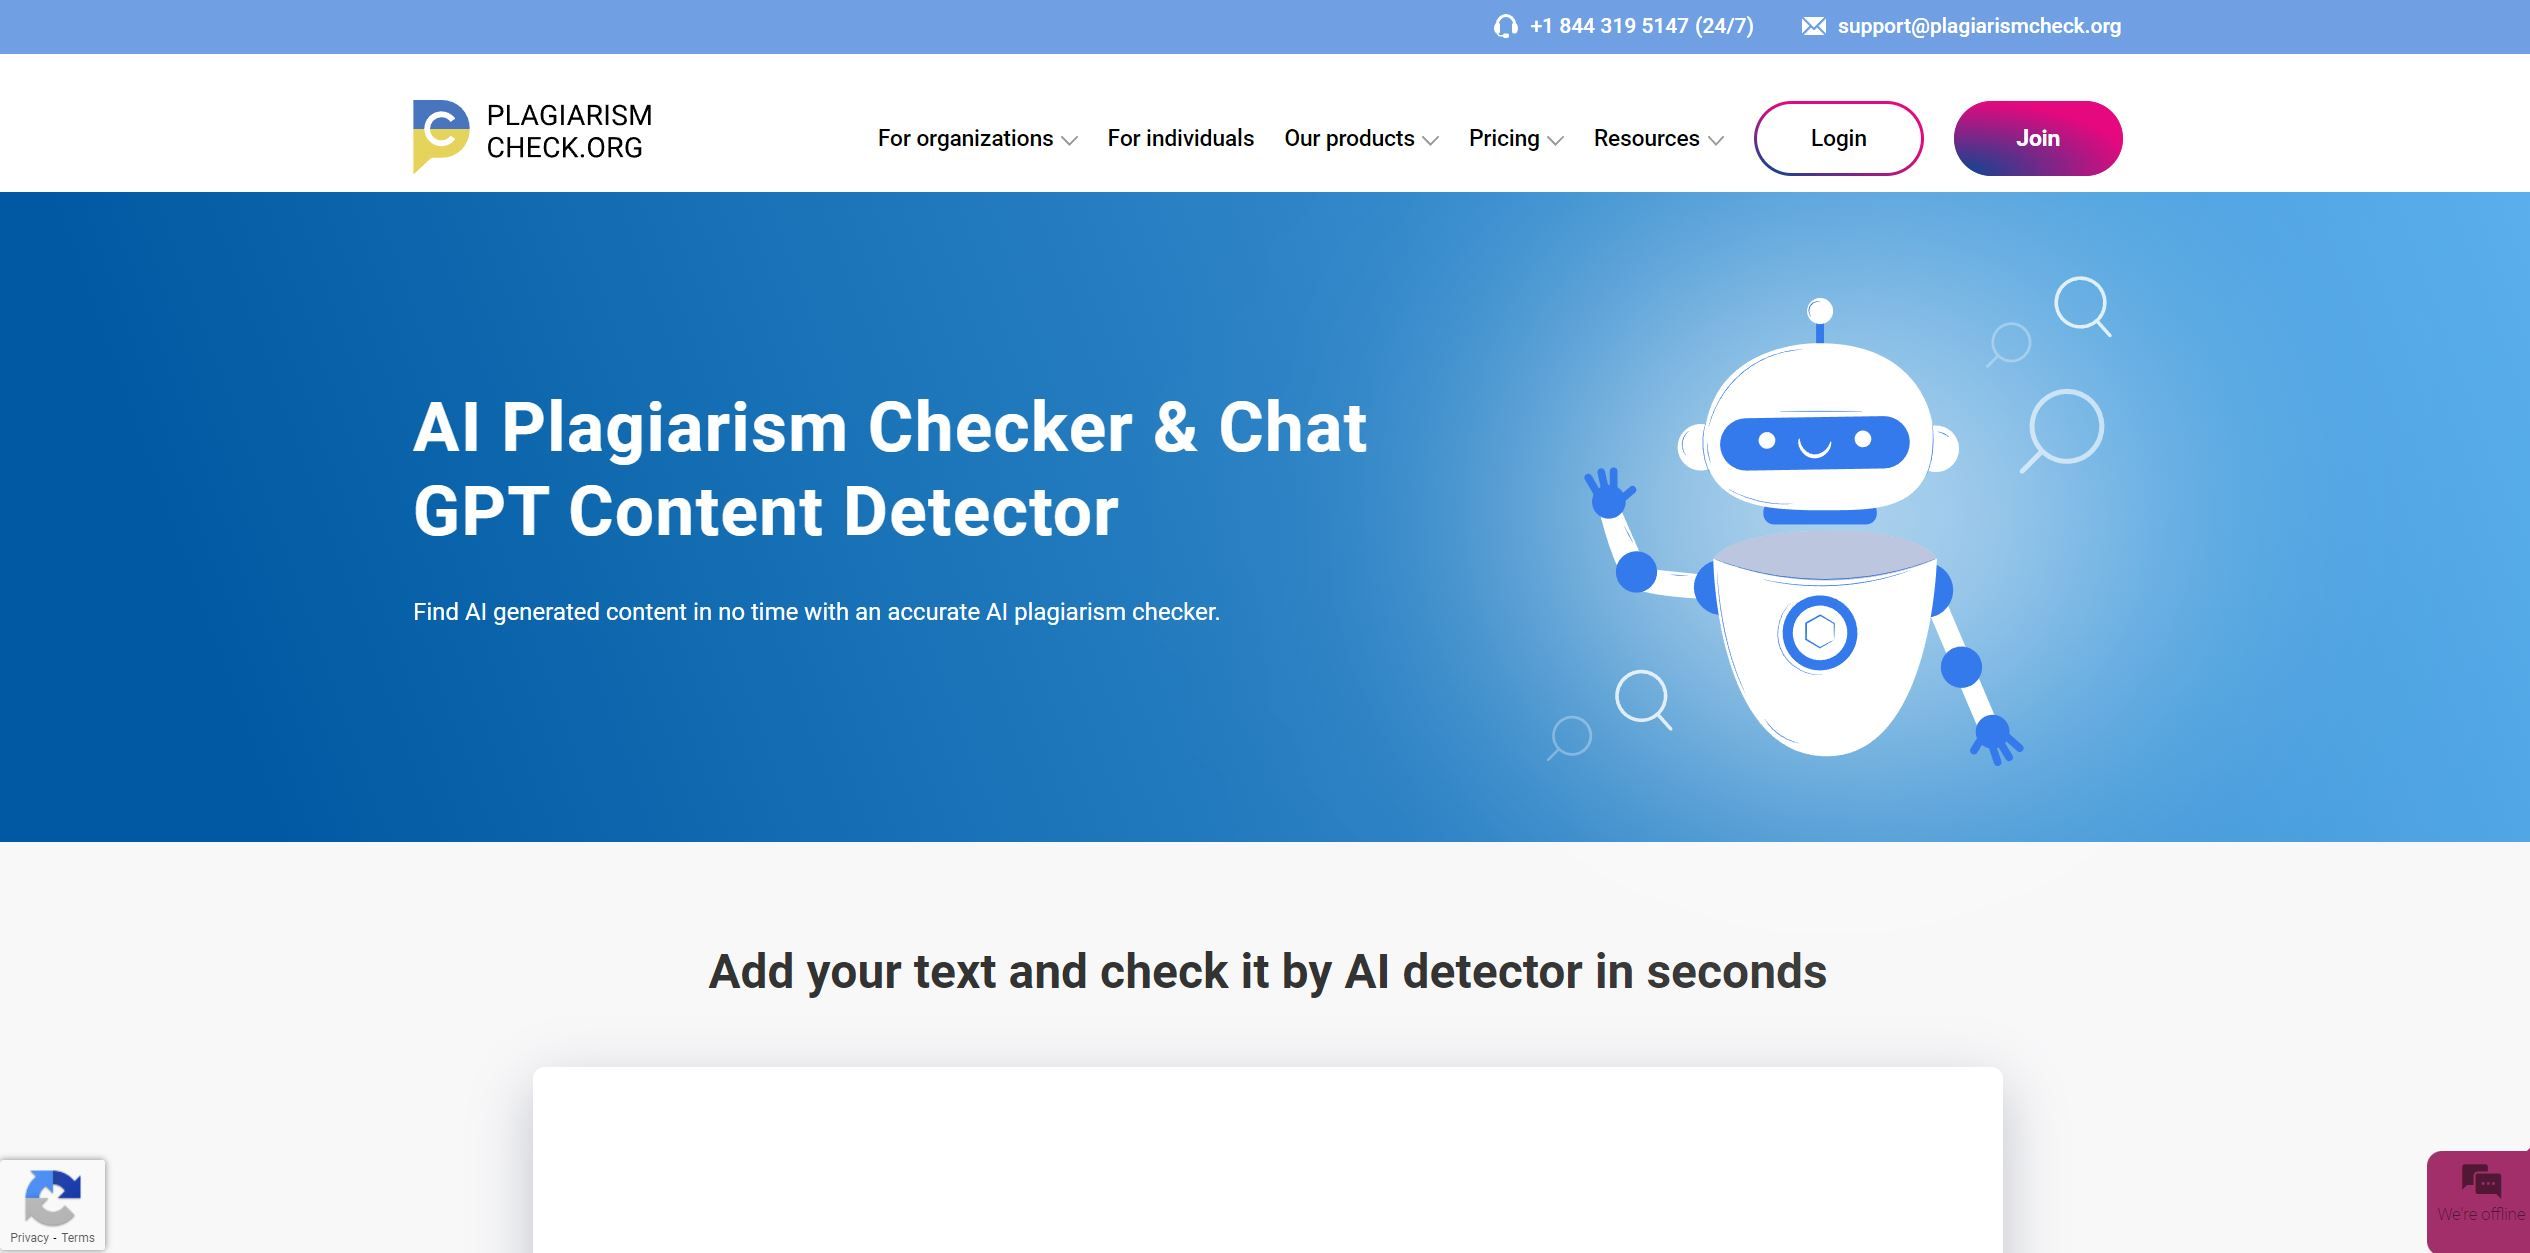  AI Plagiarism Checker & Chat GPT Content Detector